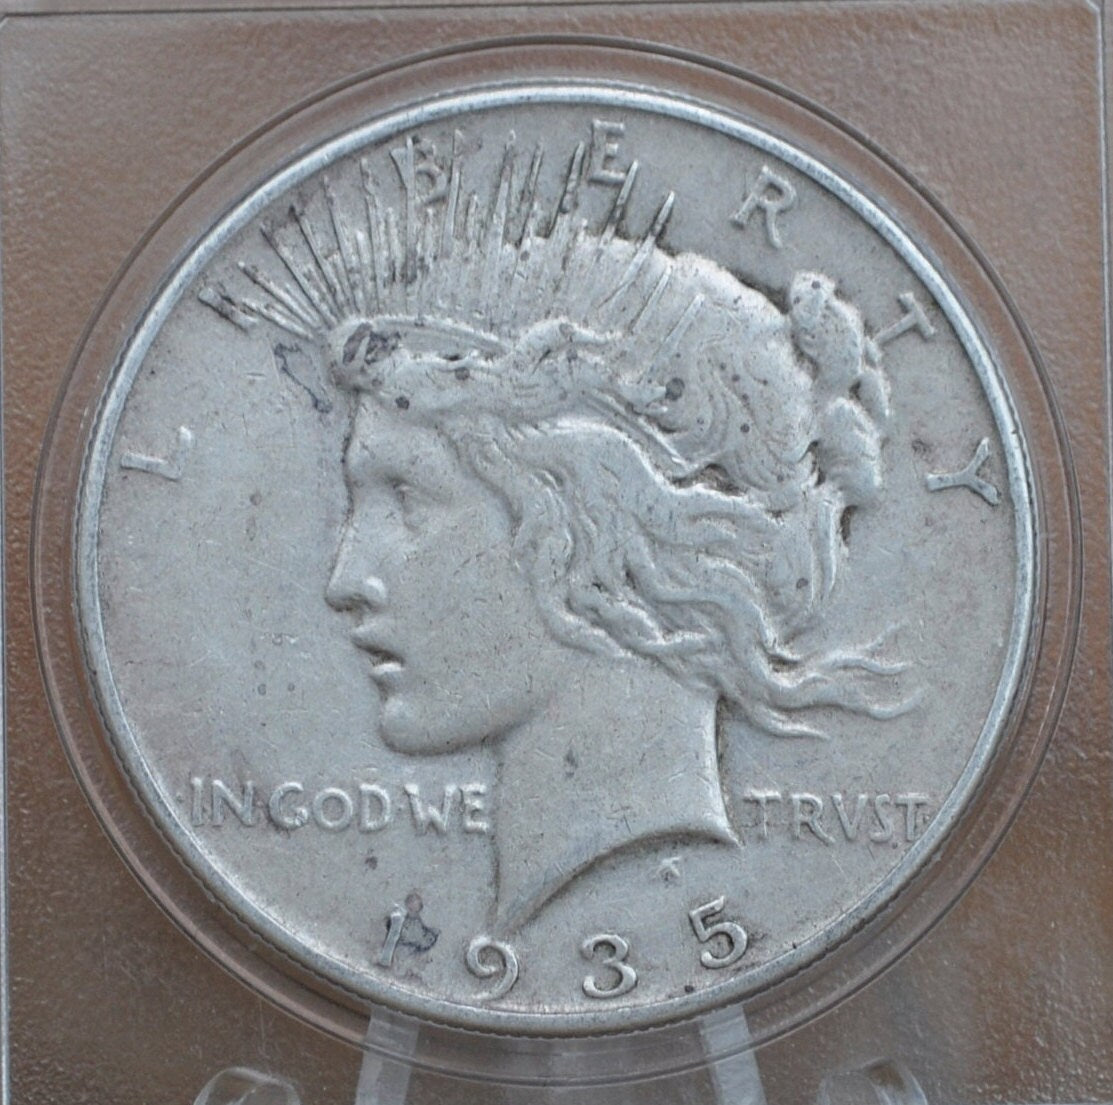 1935 Peace Silver Dollar - Choose by Grade (VF-MS62) - Philadelphia Mint - 1935 P Peace Dollar -Last Year Produced- 1935P Silver Dollar 1935